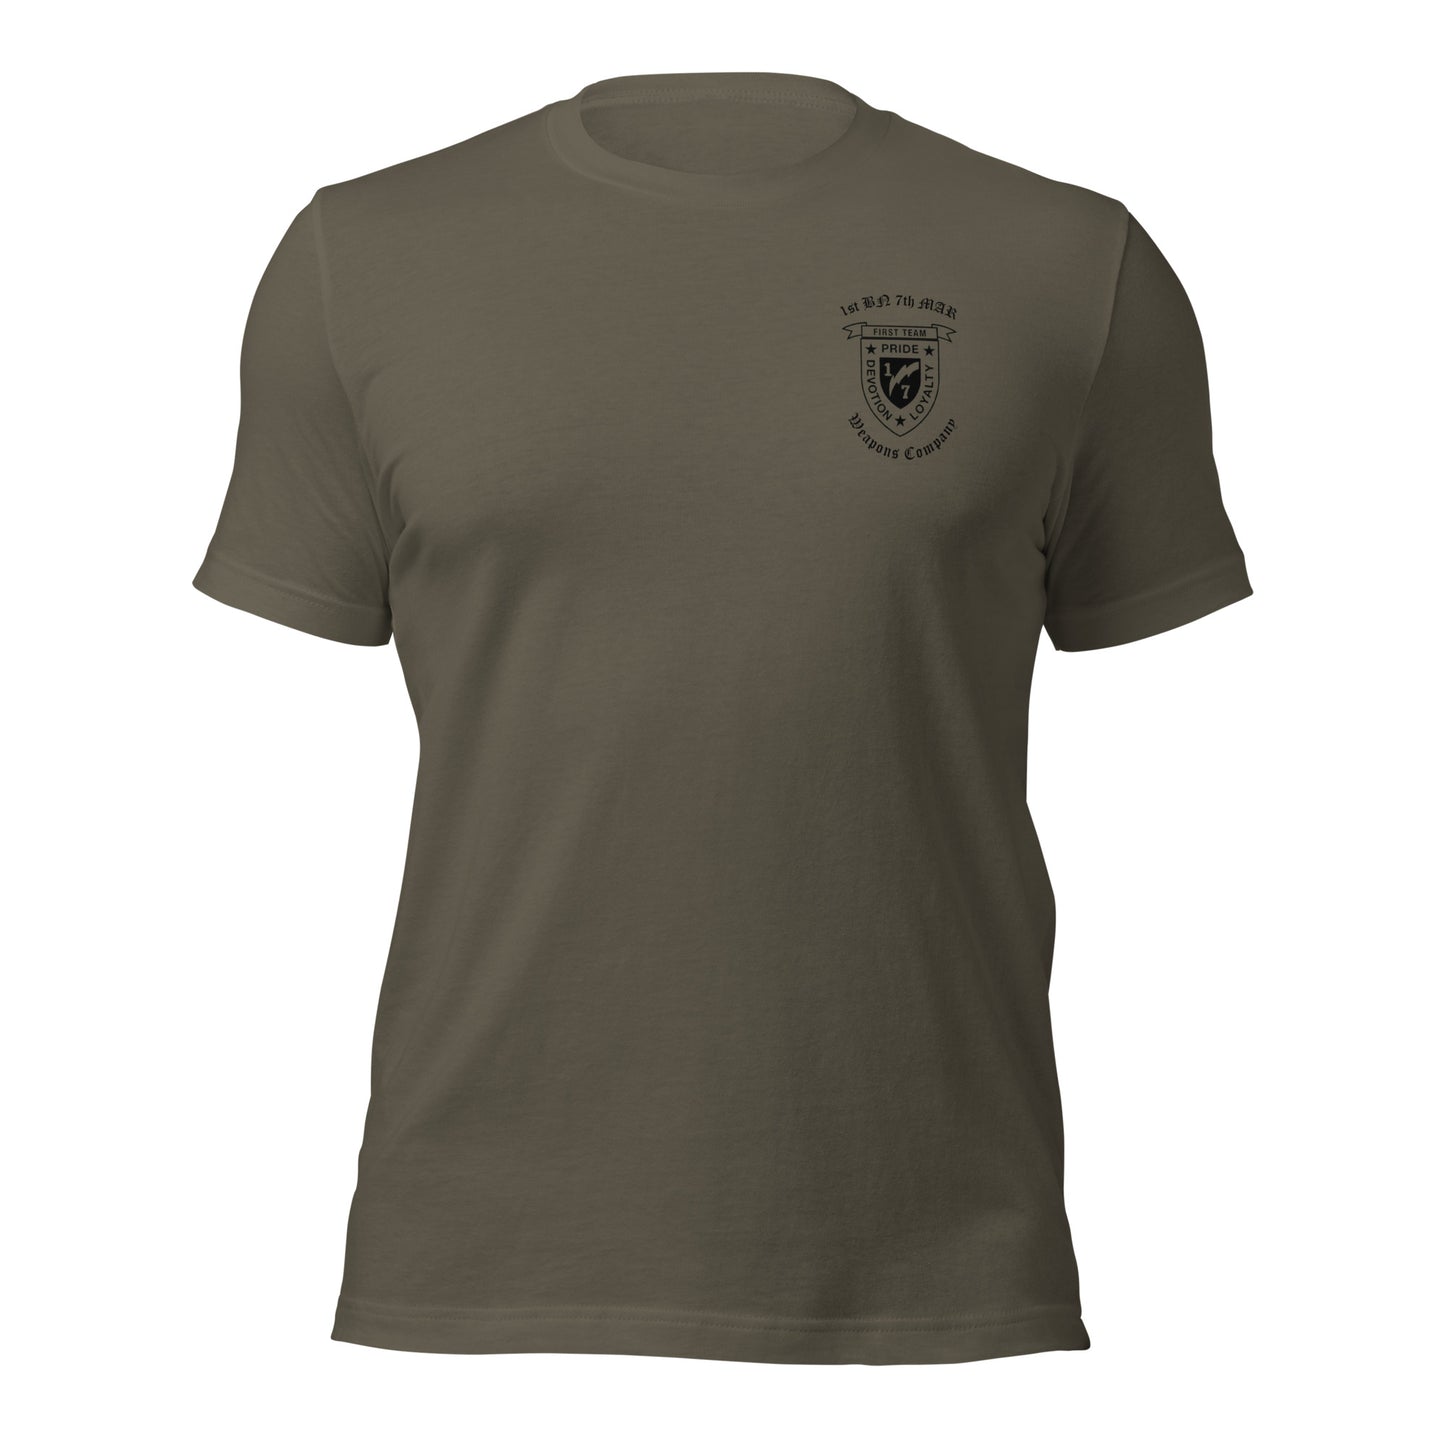 WPNS Co Bridgeport '24 - Shirt